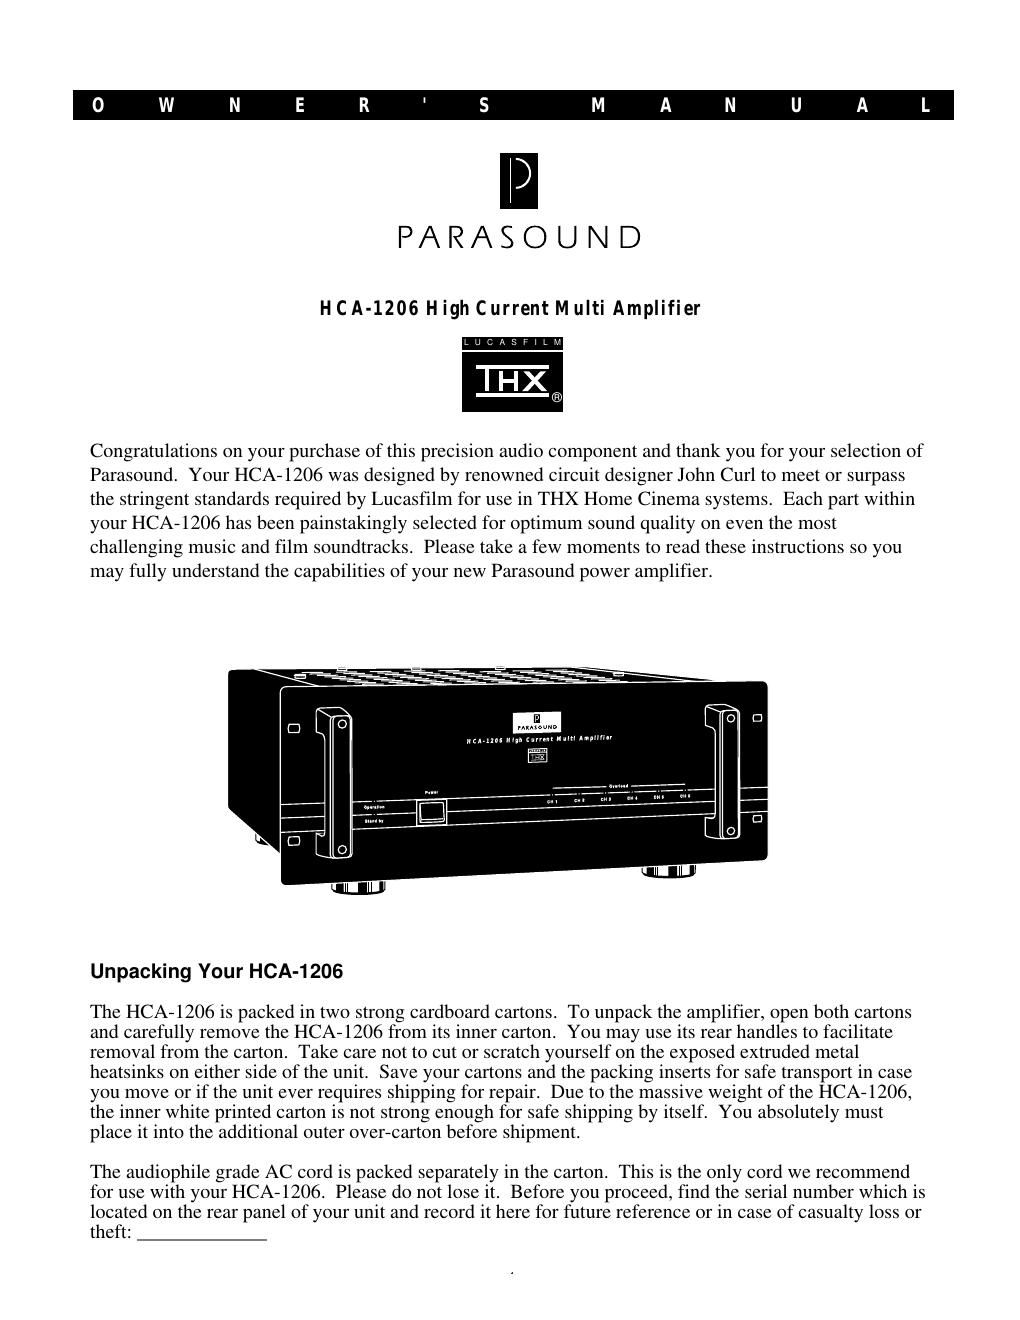 parasound hca 1206 owners manual